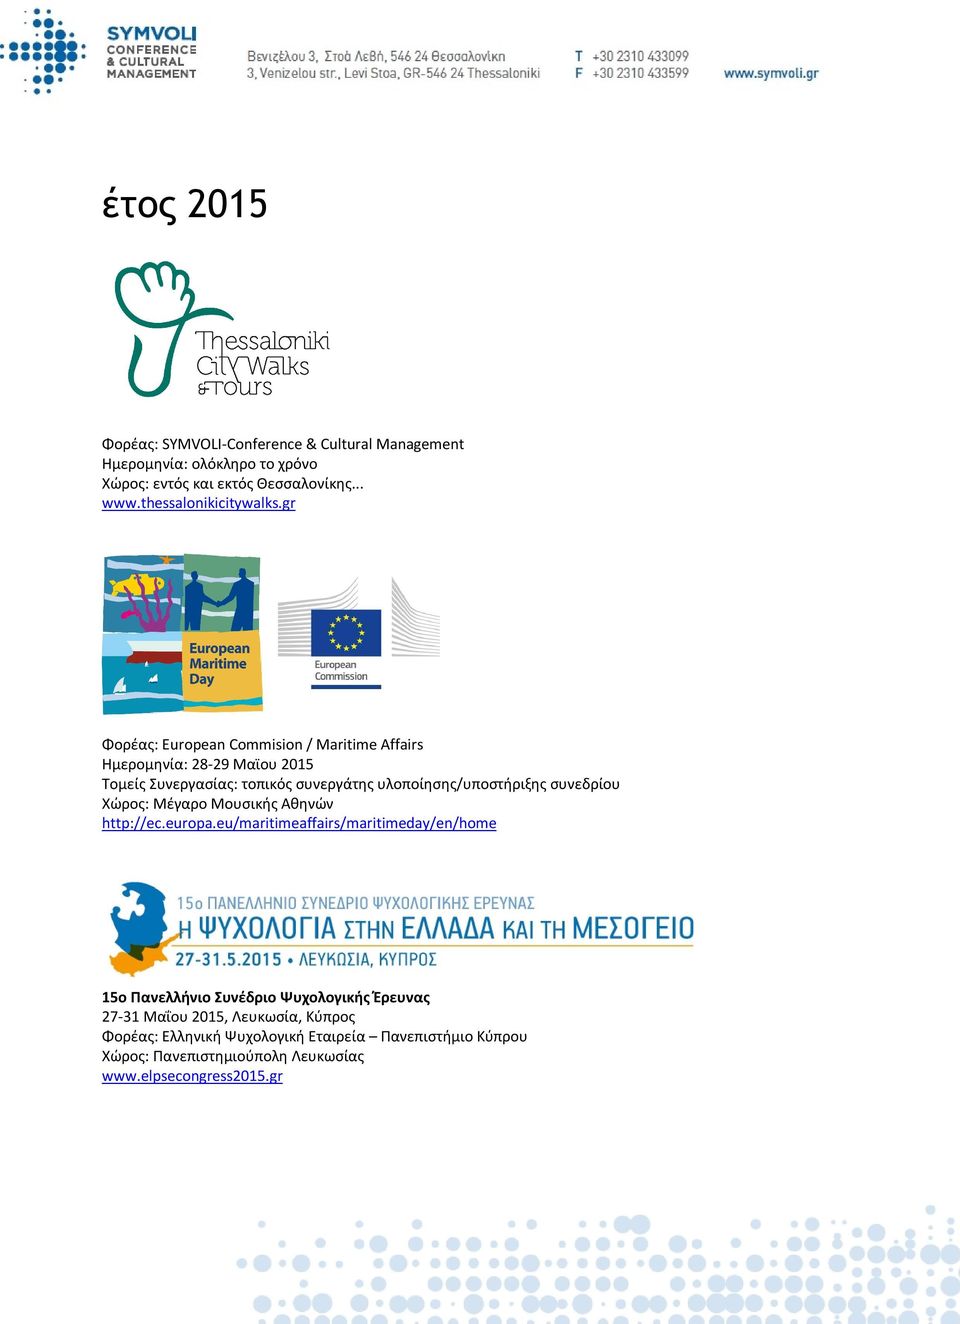 gr Φορέας: European Commision / Maritime Affairs Ημερομηνία: 28-29 Μαϊου 2015 Τομείς Συνεργασίας: τοπικός συνεργάτης υλοποίησης/υποστήριξης